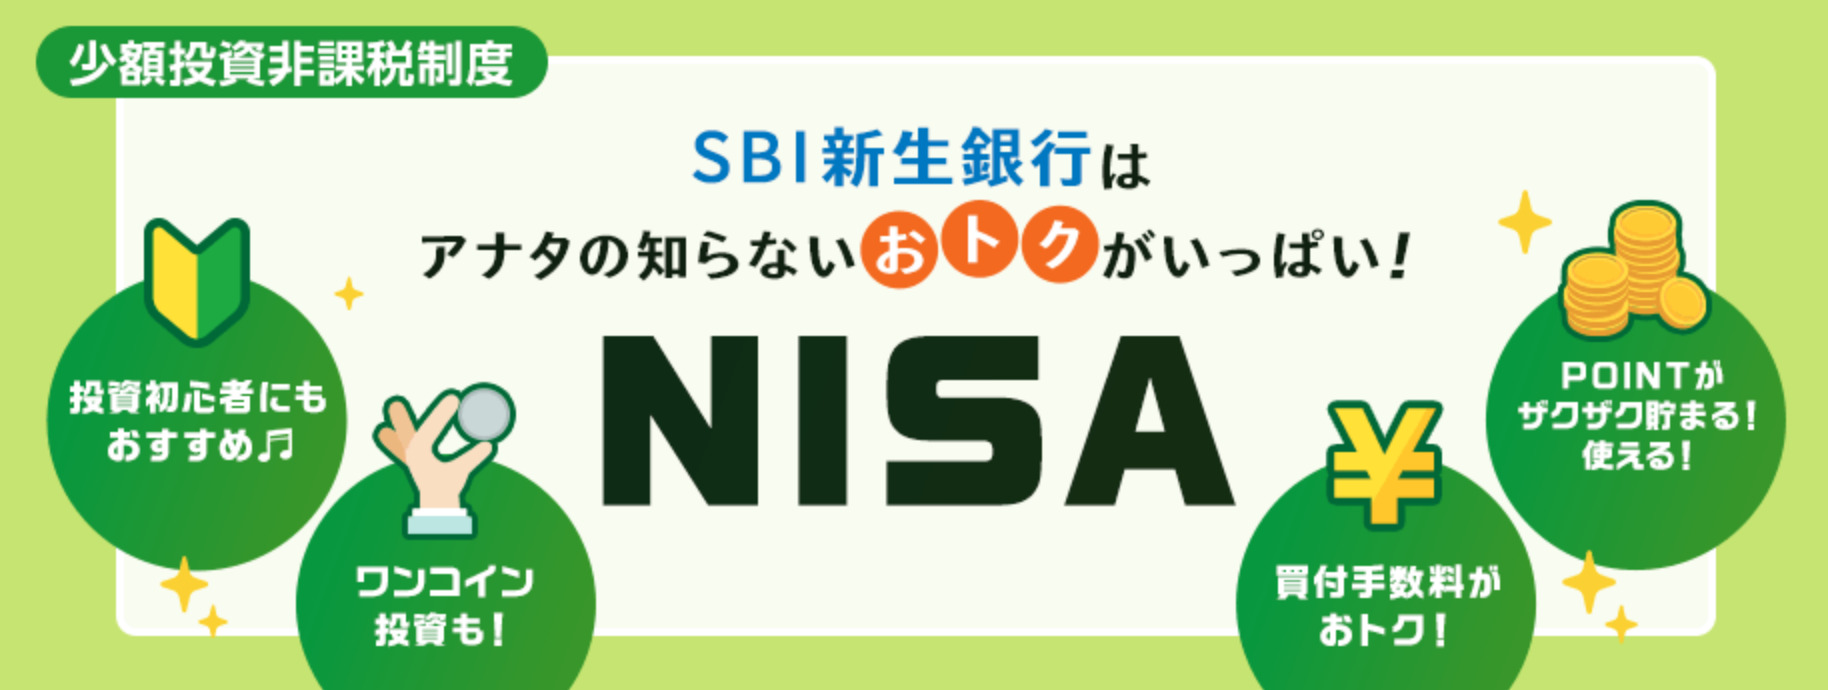 SBI新生銀行で案内されているNISAについて